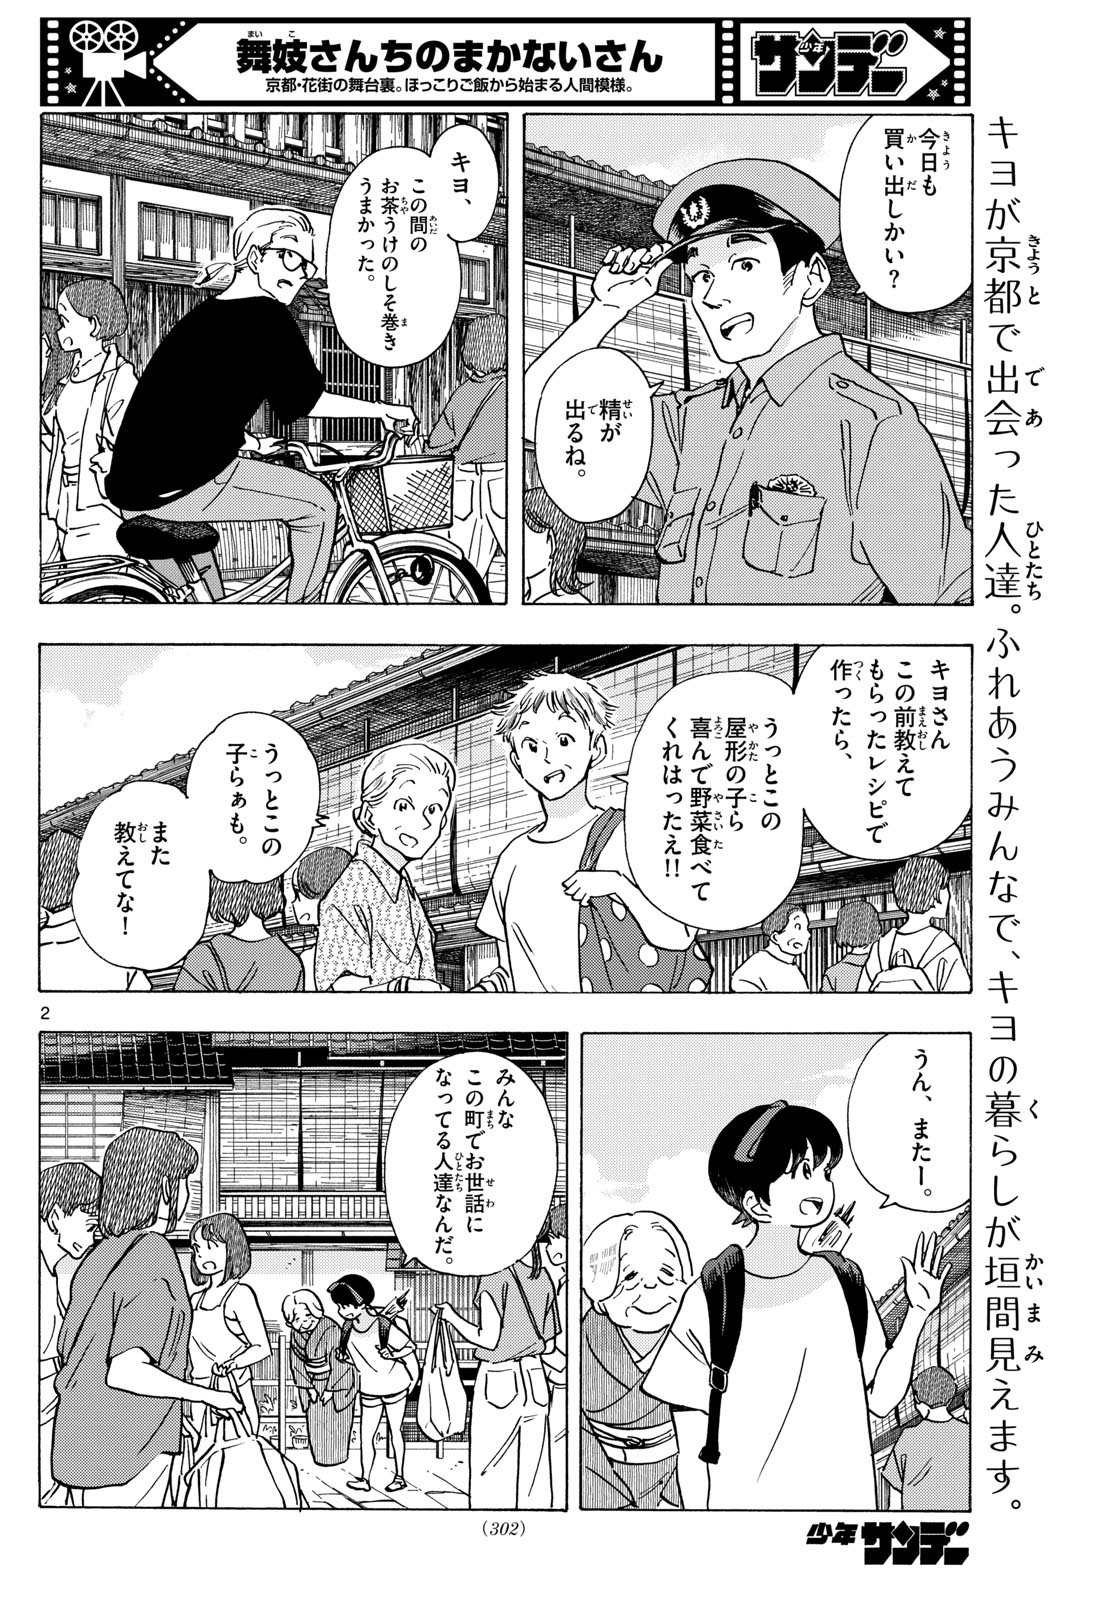 Maiko-san Chi no Makanai-san - Chapter 304 - Page 2